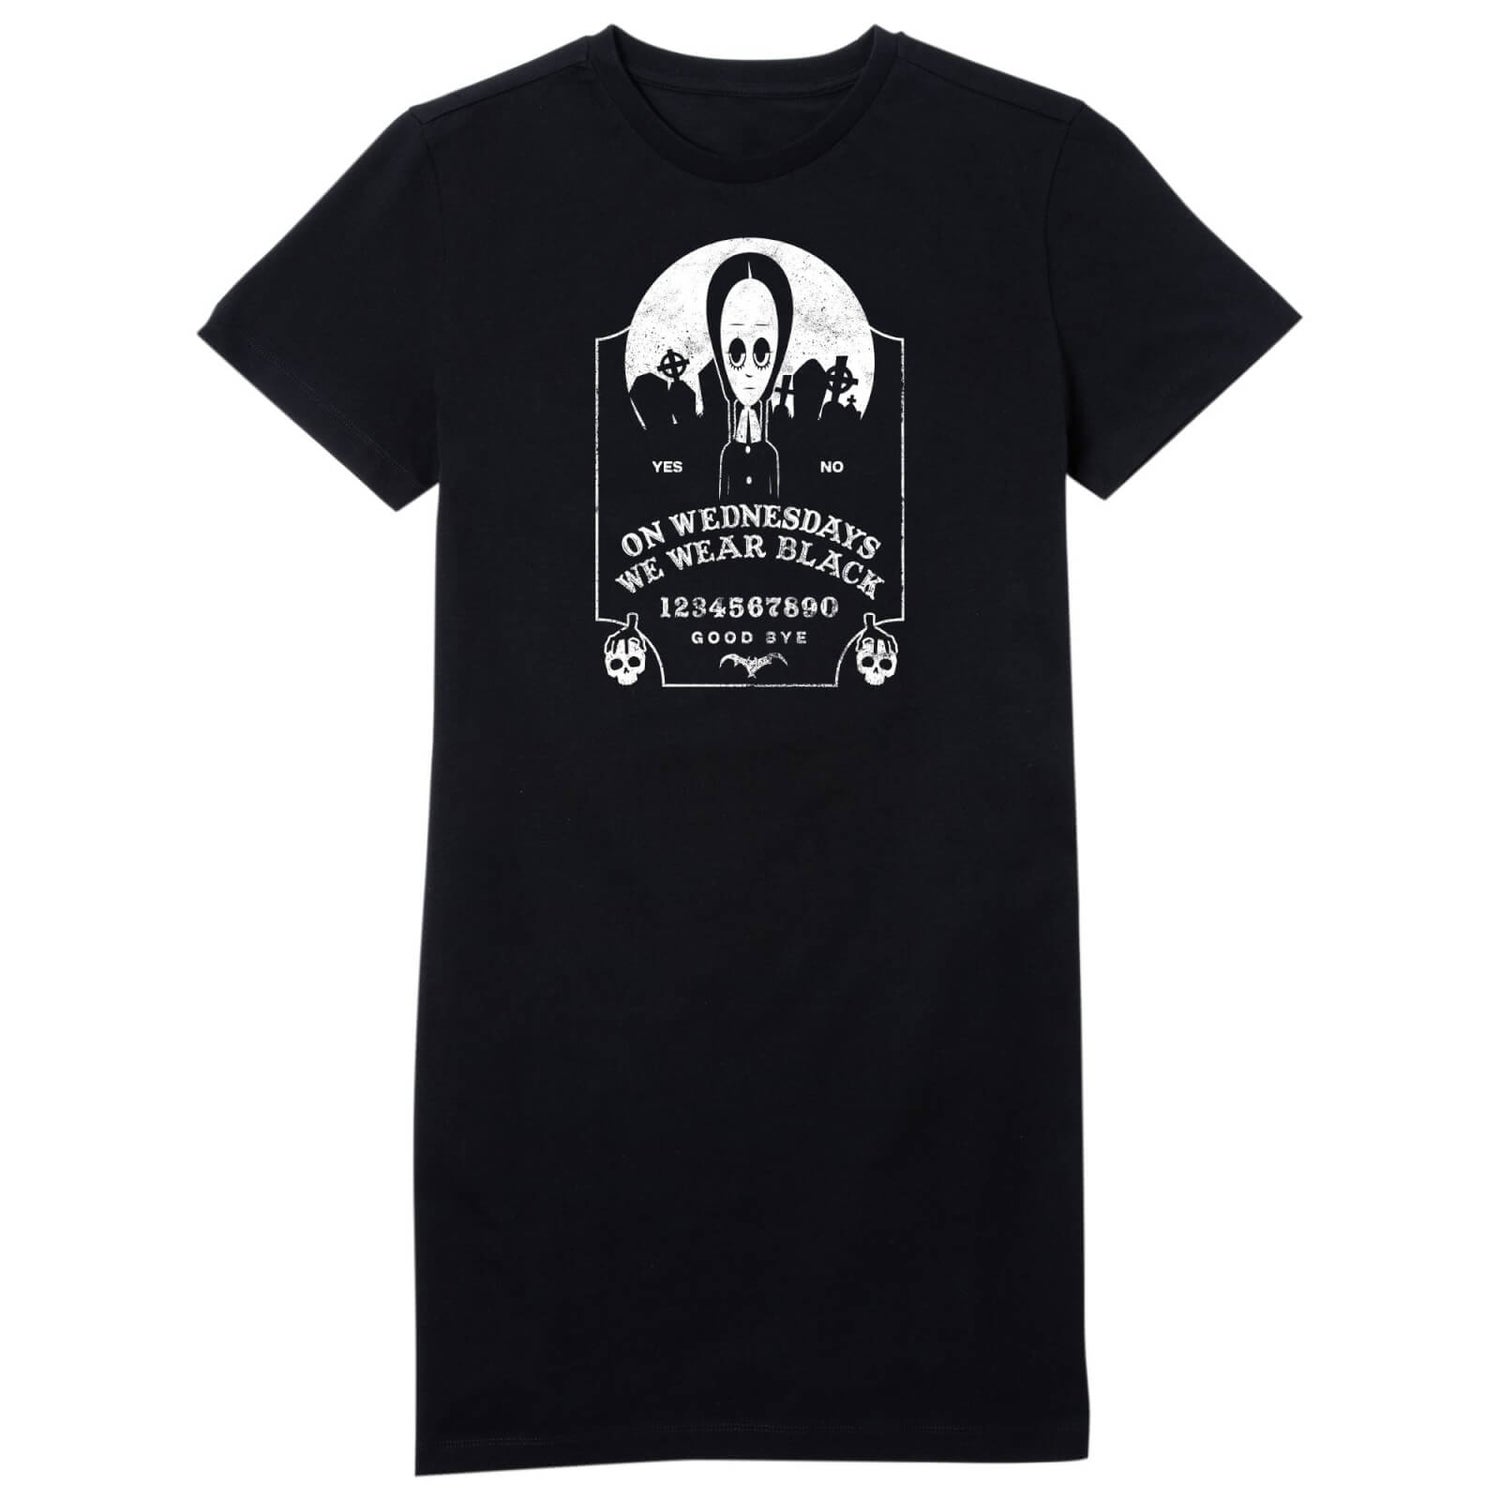 The Addams Family On Wednesday's We Wear Black Women's T-Shirt Dress - Black